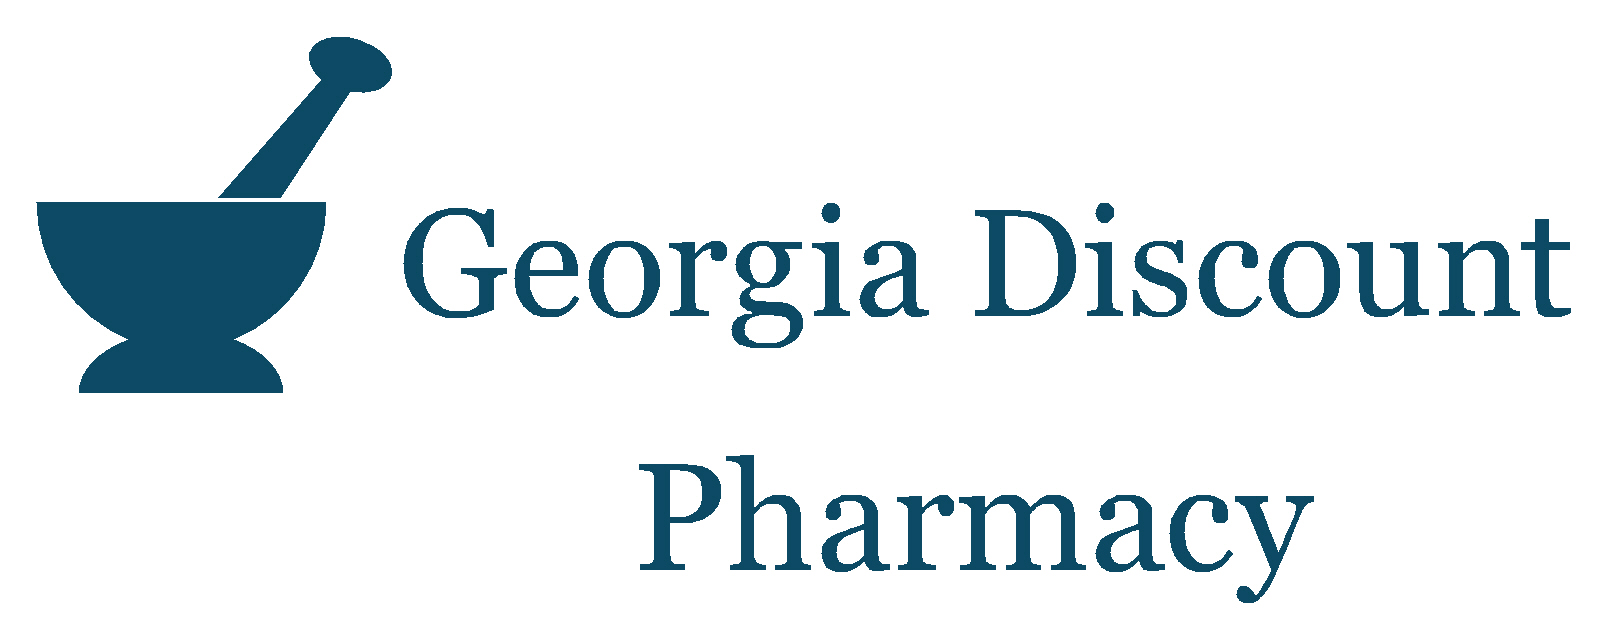 Georgia Discount Pharmacy